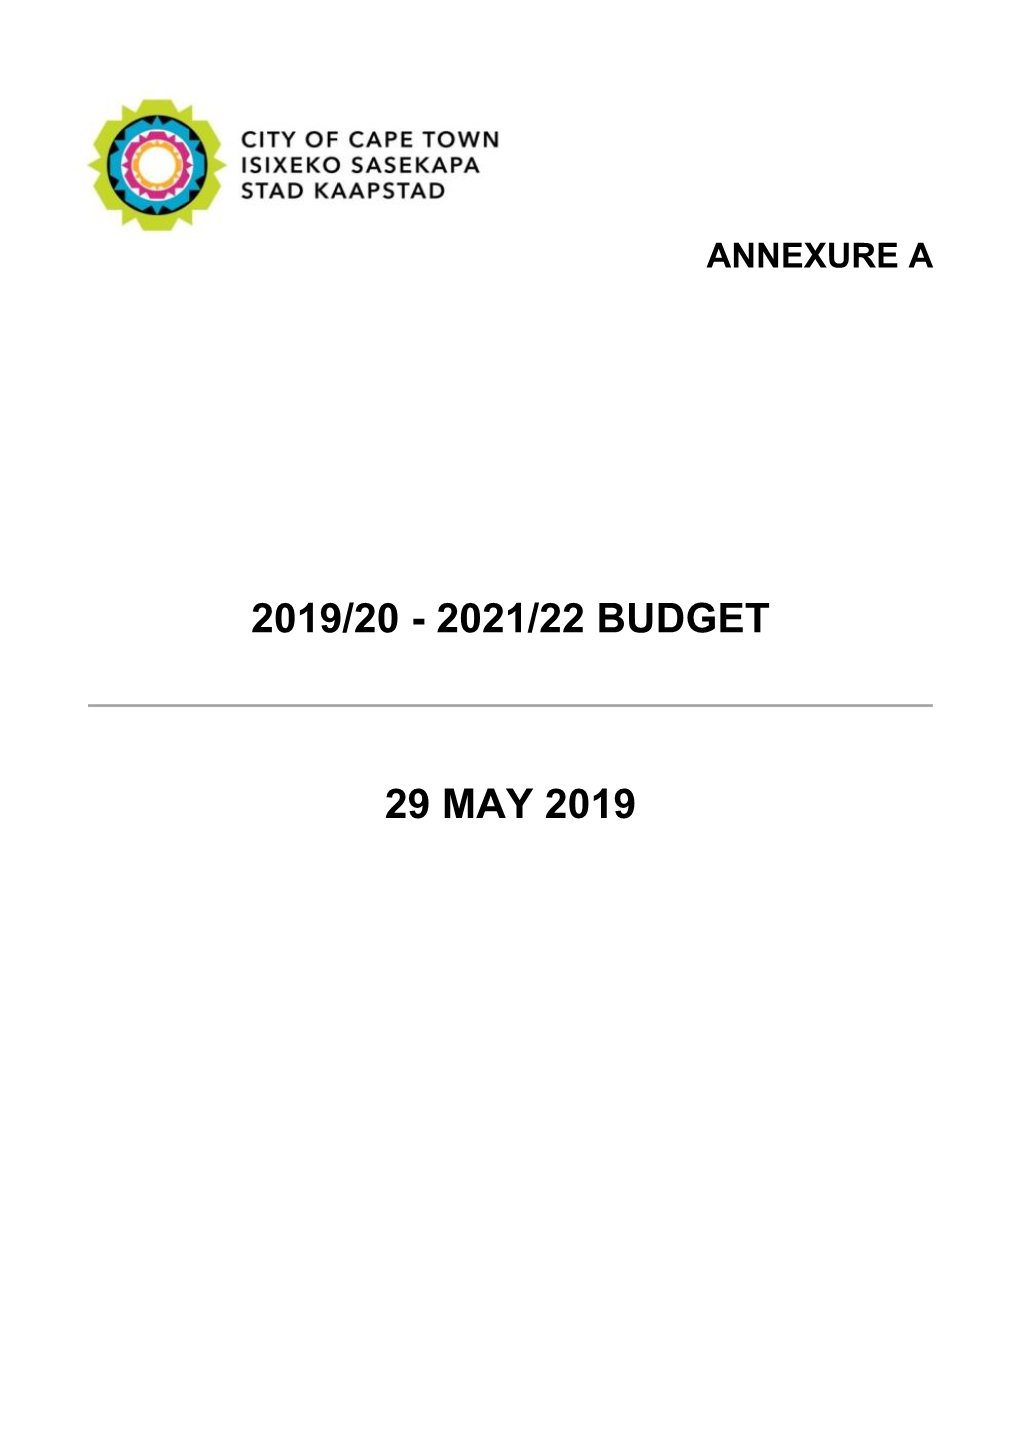 2019/20 - 2021/22 Budget